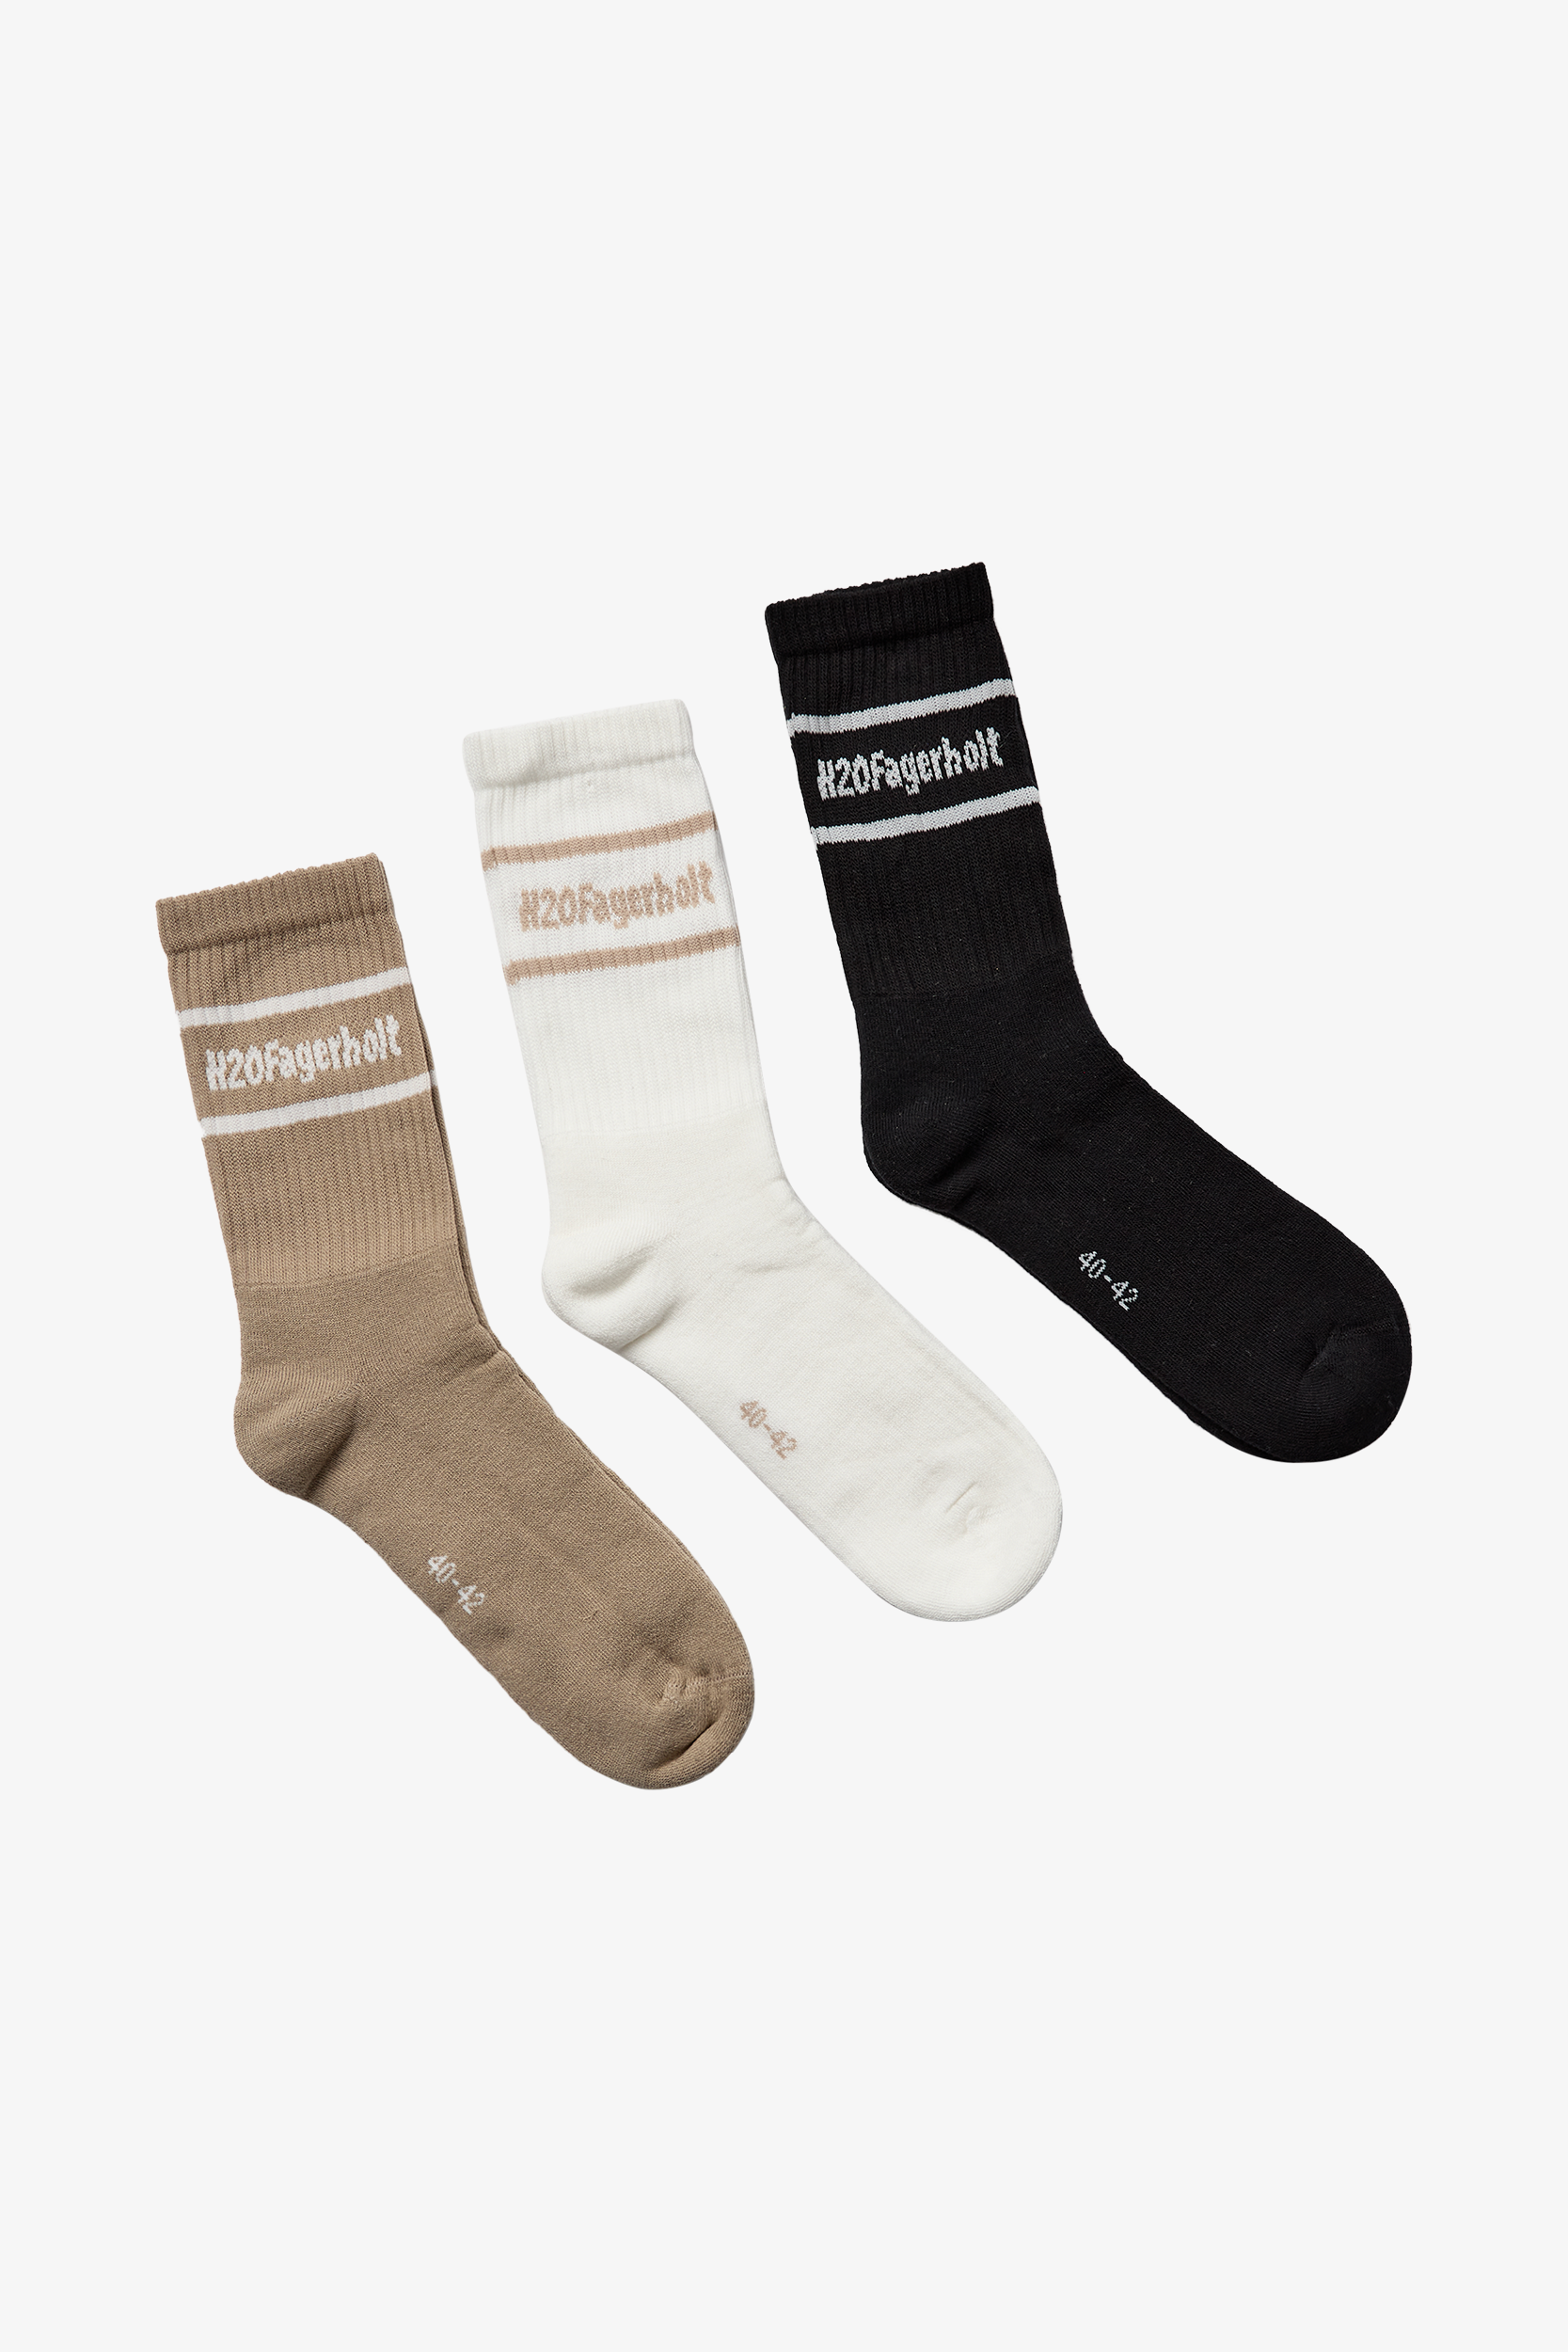 H2OFagerholt New Suck Socks Socks 7891 Black/White/Creamy Grey